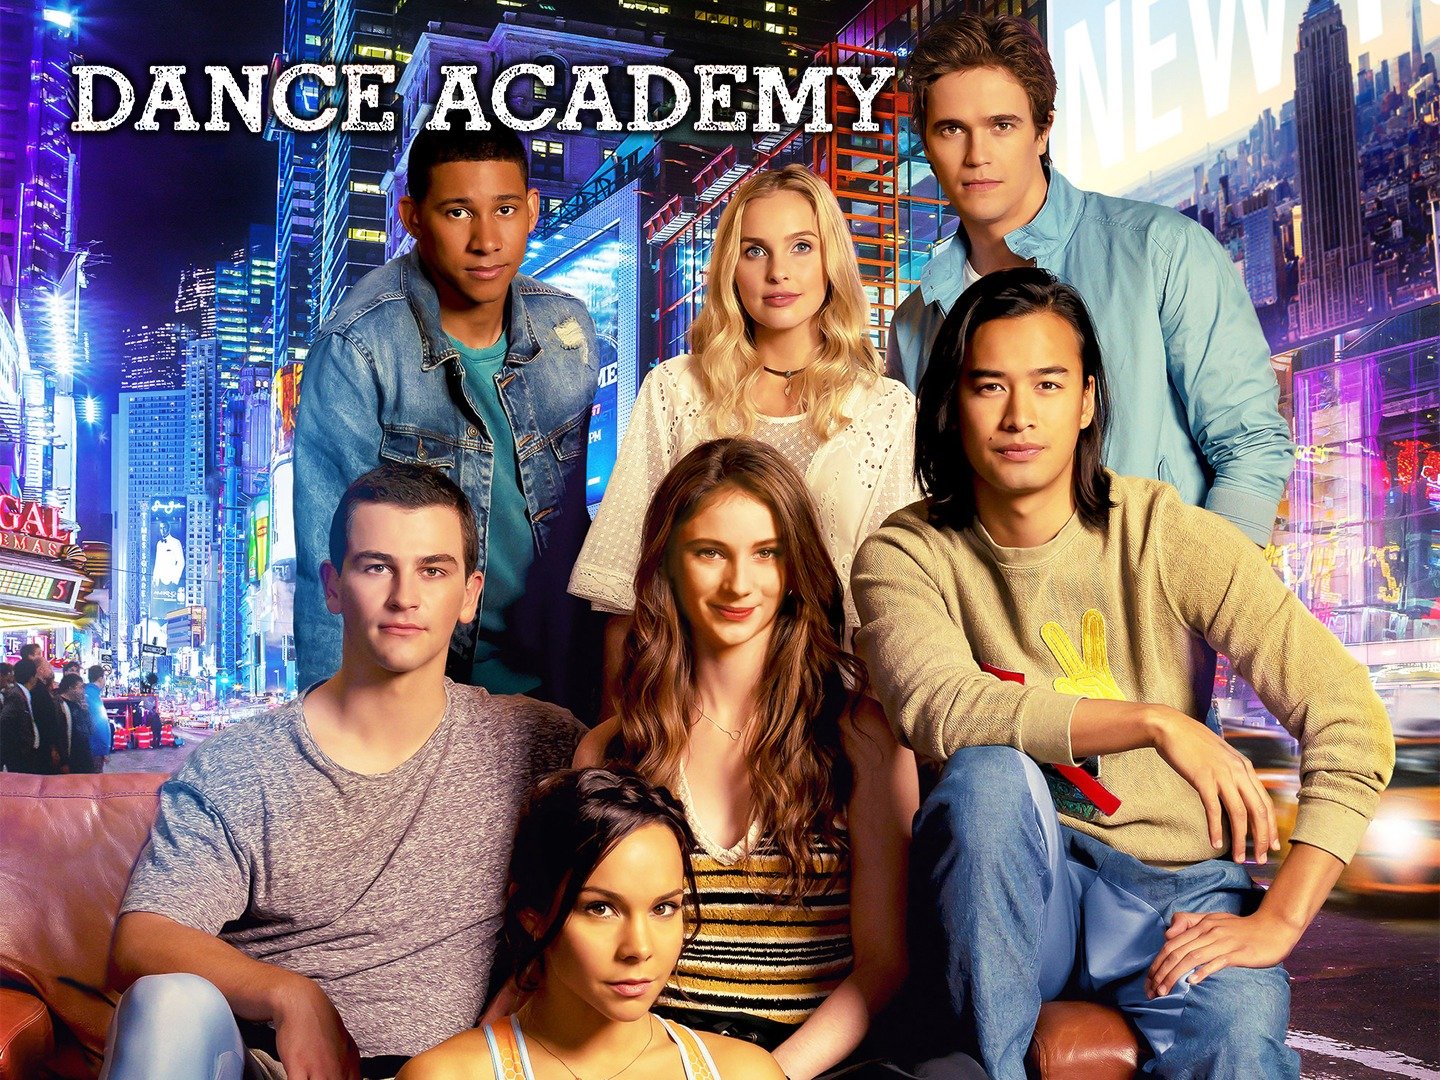 "Dance Academy: The Movie photo 9"